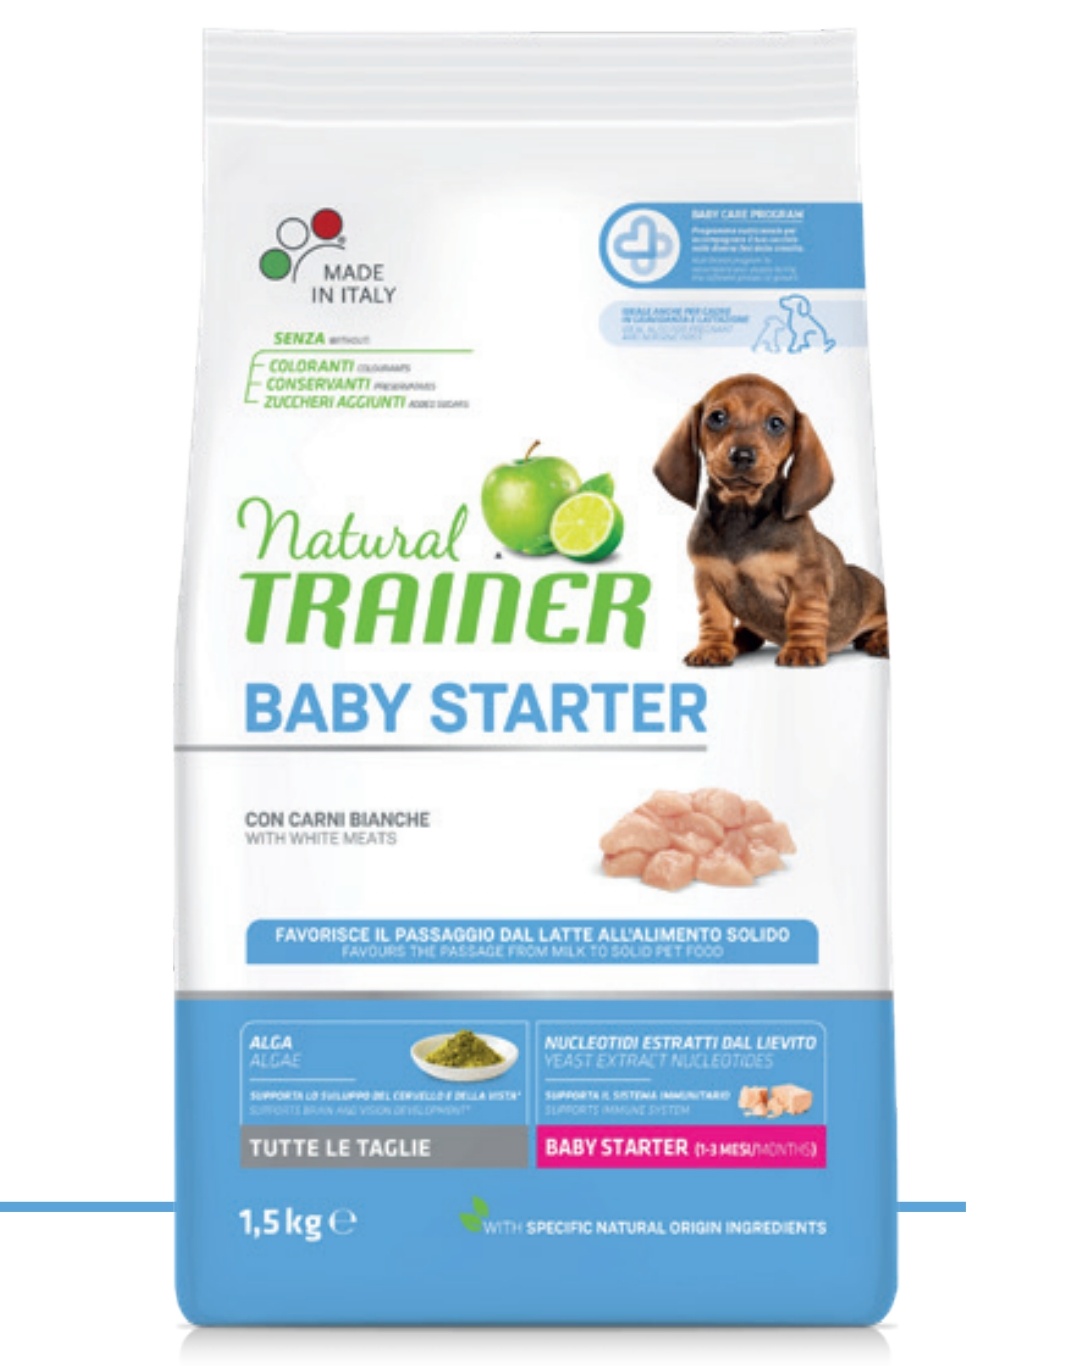 Trainer Baby Starter (1-3 mesi)  con Carni Bianche 1.5kg